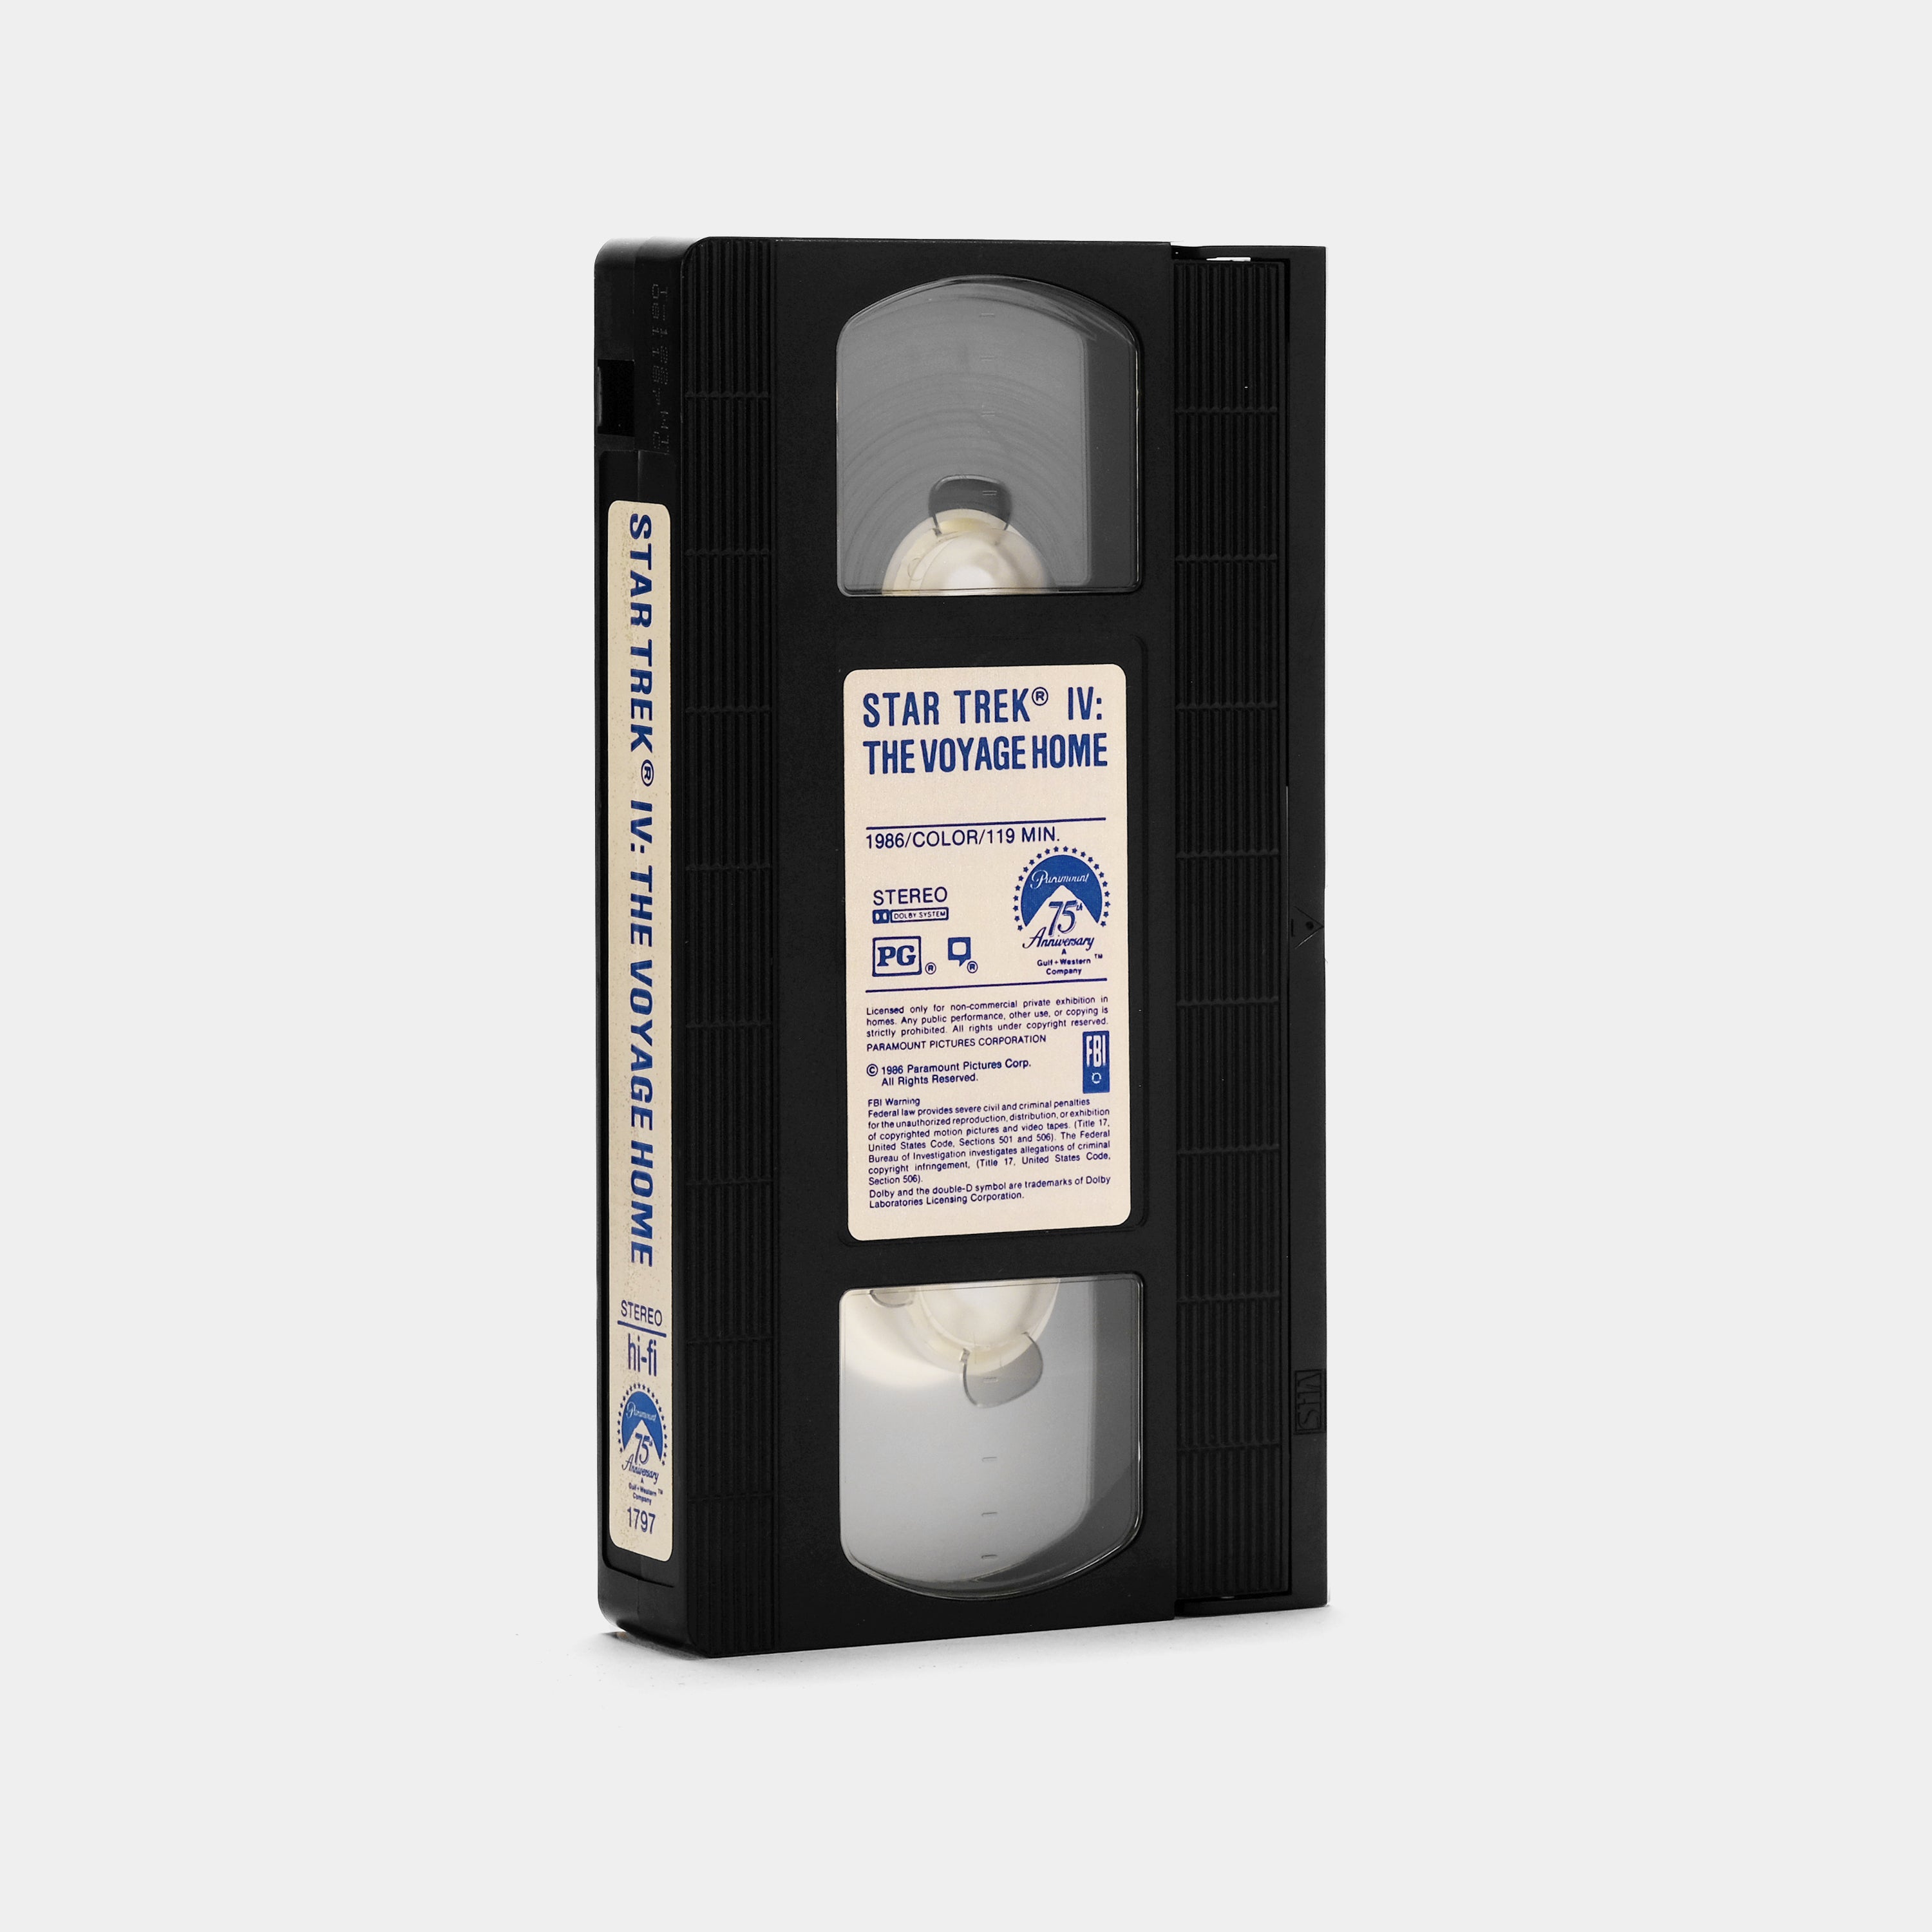 Star Trek IV: The Voyage Home VHS Tape